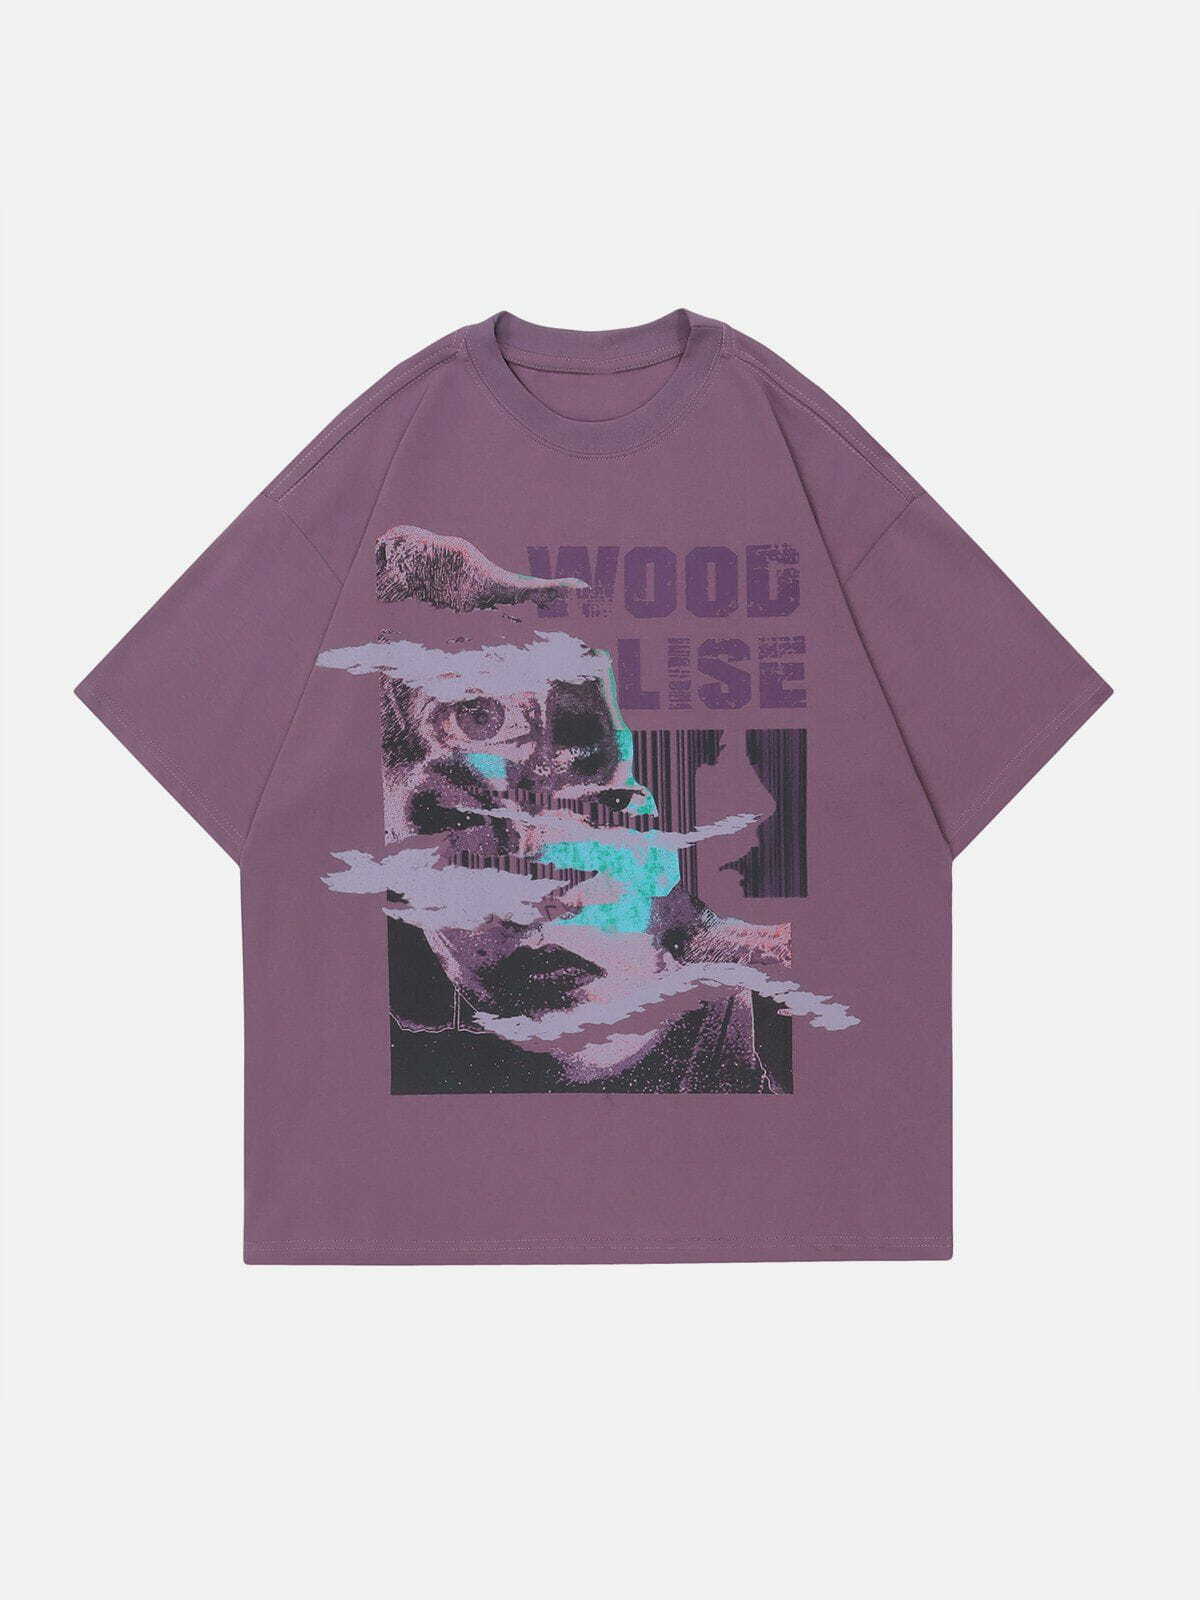 vibrant tie dye abstract tee edgy y2k print shirt 2179